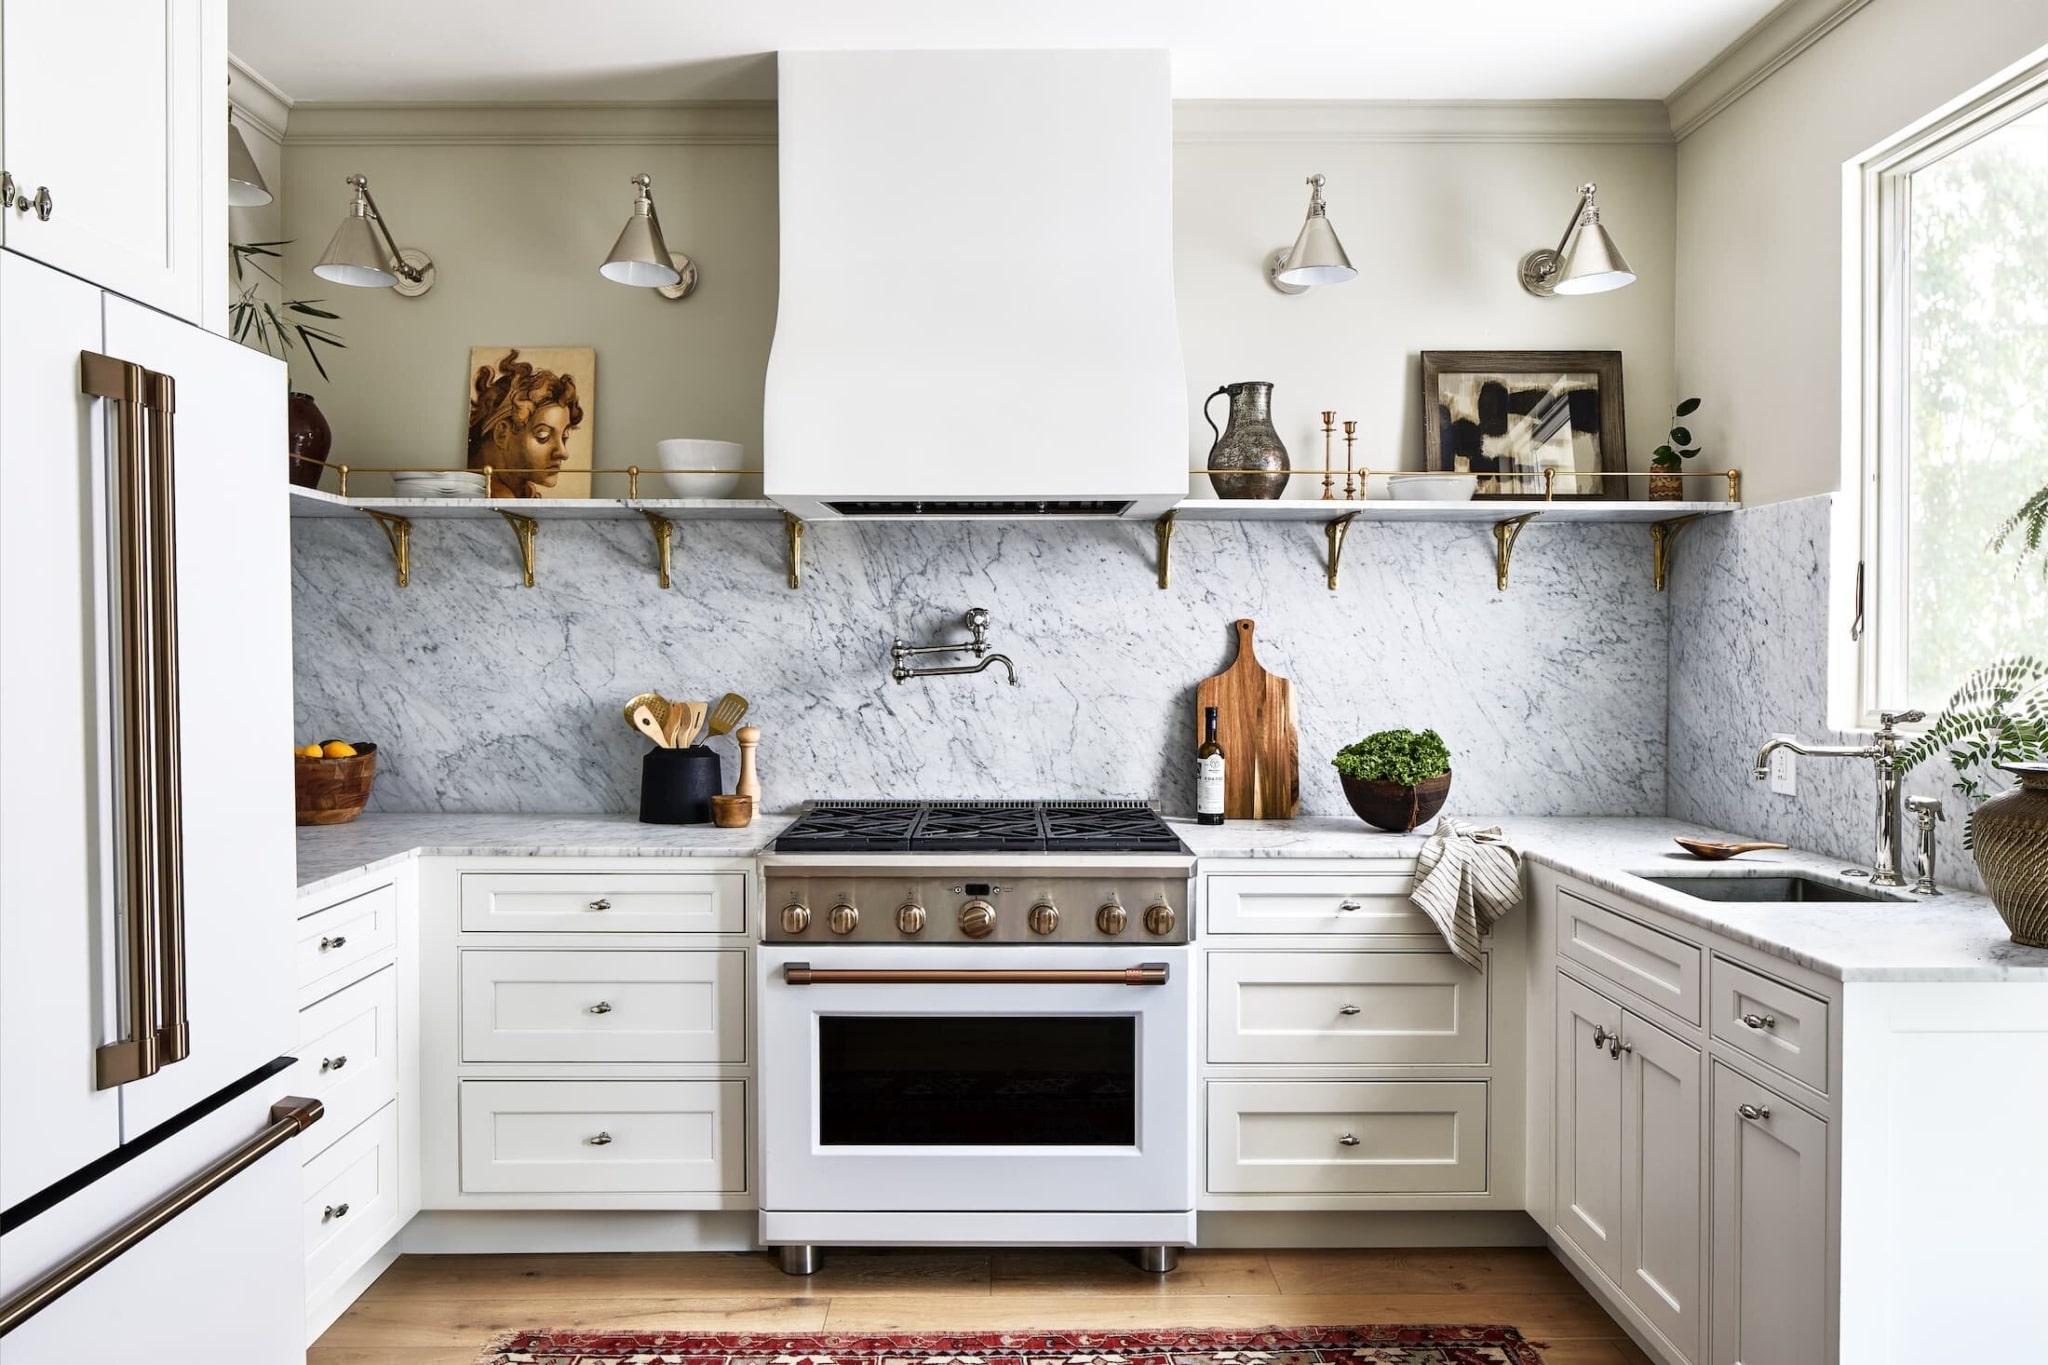 Zoe Feldman Interior Design kitchen | Photography: Stacy Zarin Goldberg - kitchen - kitchen design - kitchen decor - kitchen design ideas